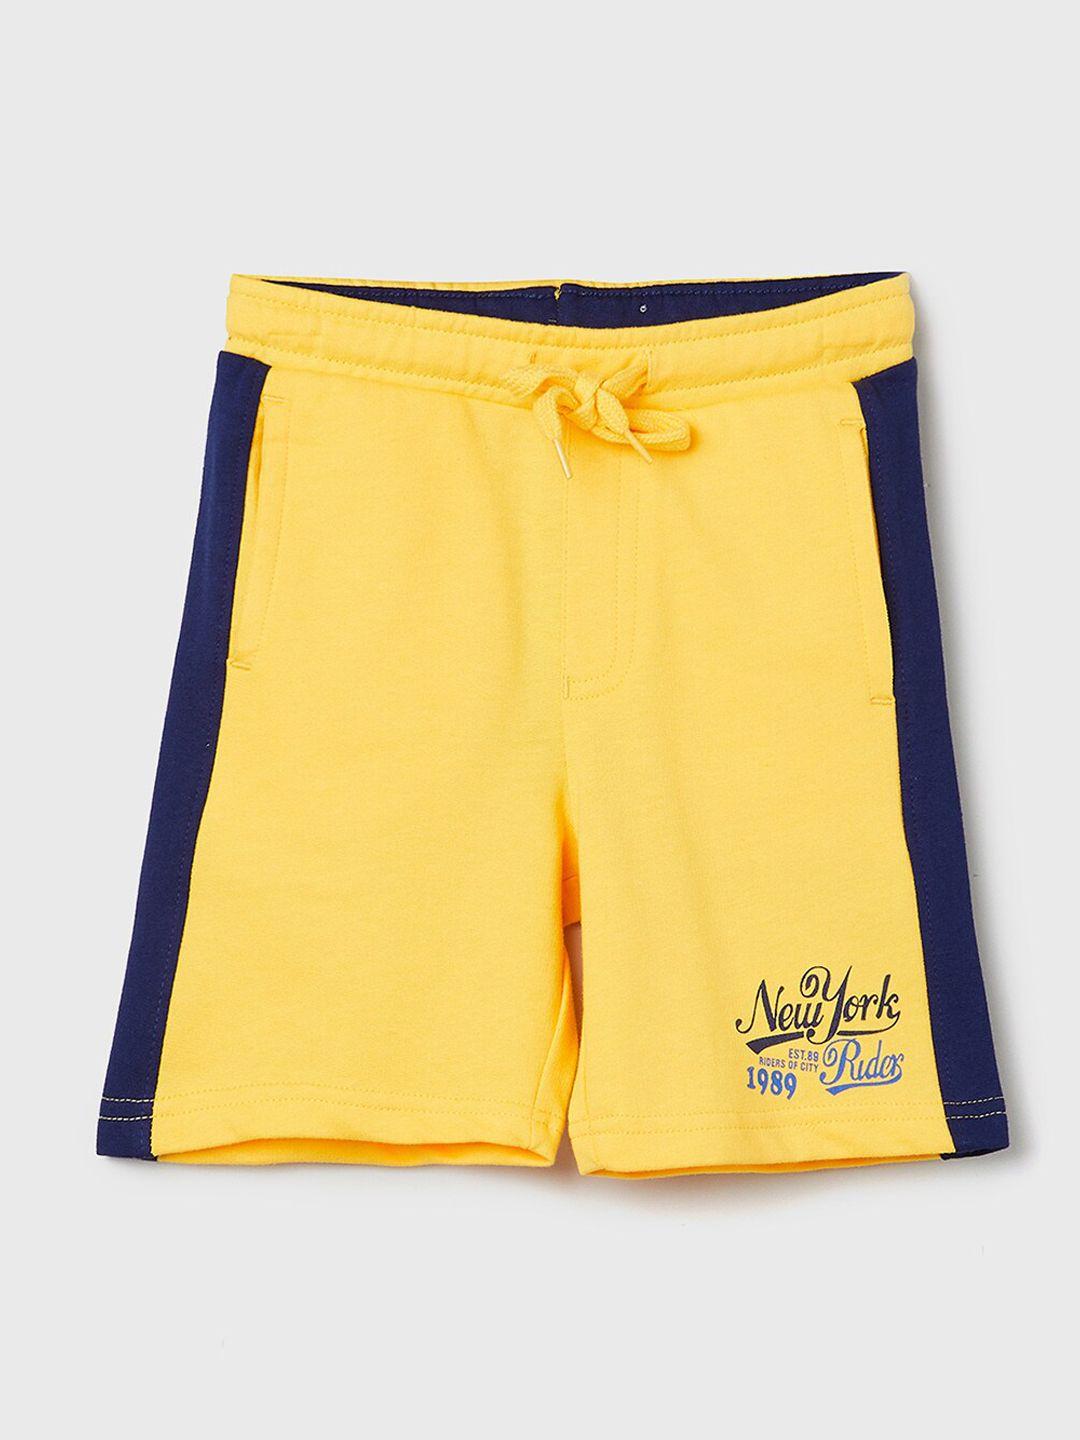 max-boys-yellow-solid-shorts